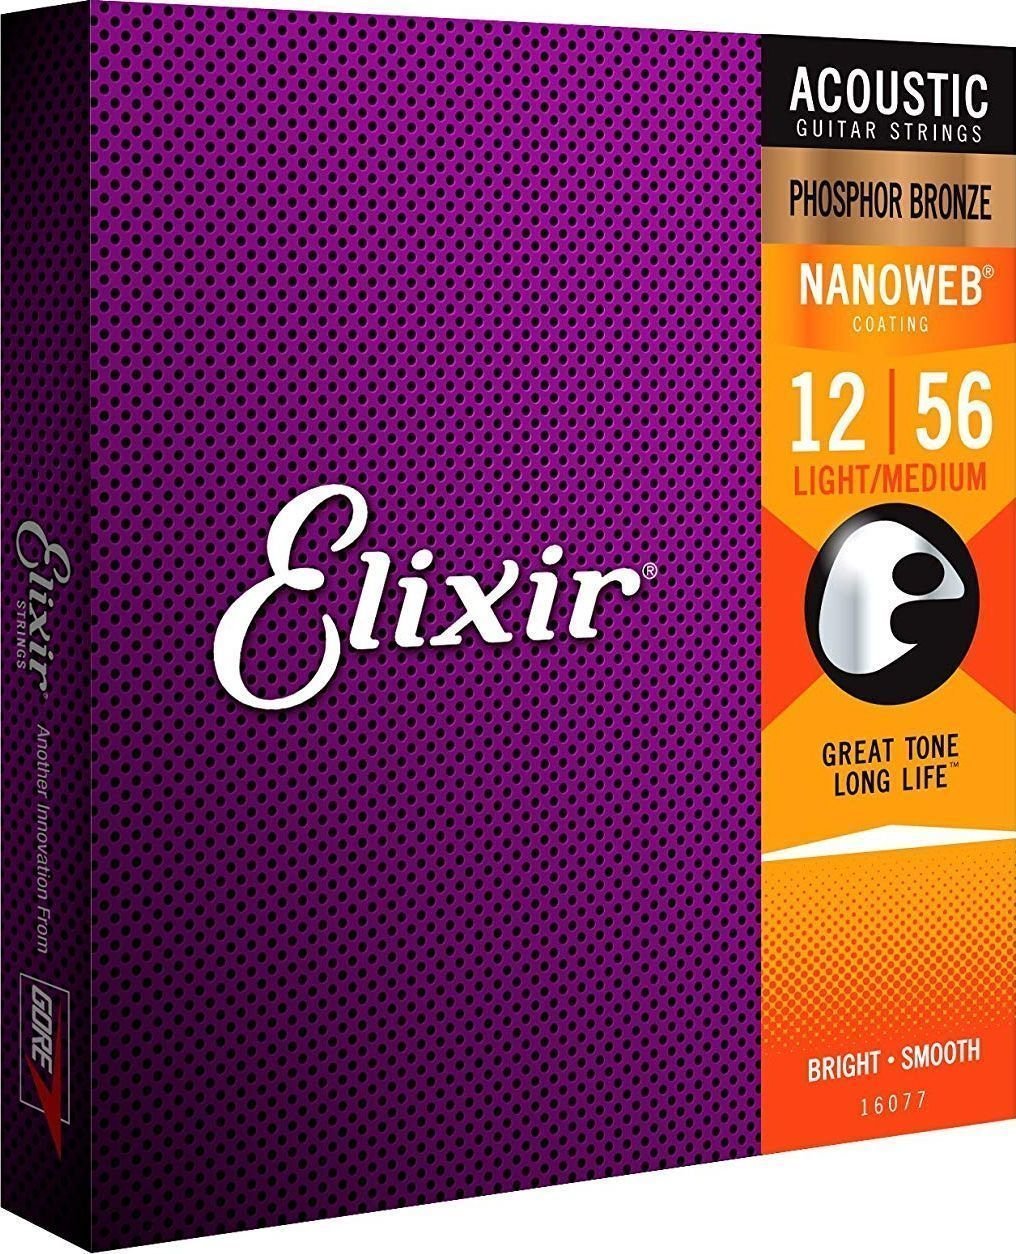 Žice za akustičnu gitaru Elixir 16077 Nanoweb 12-56